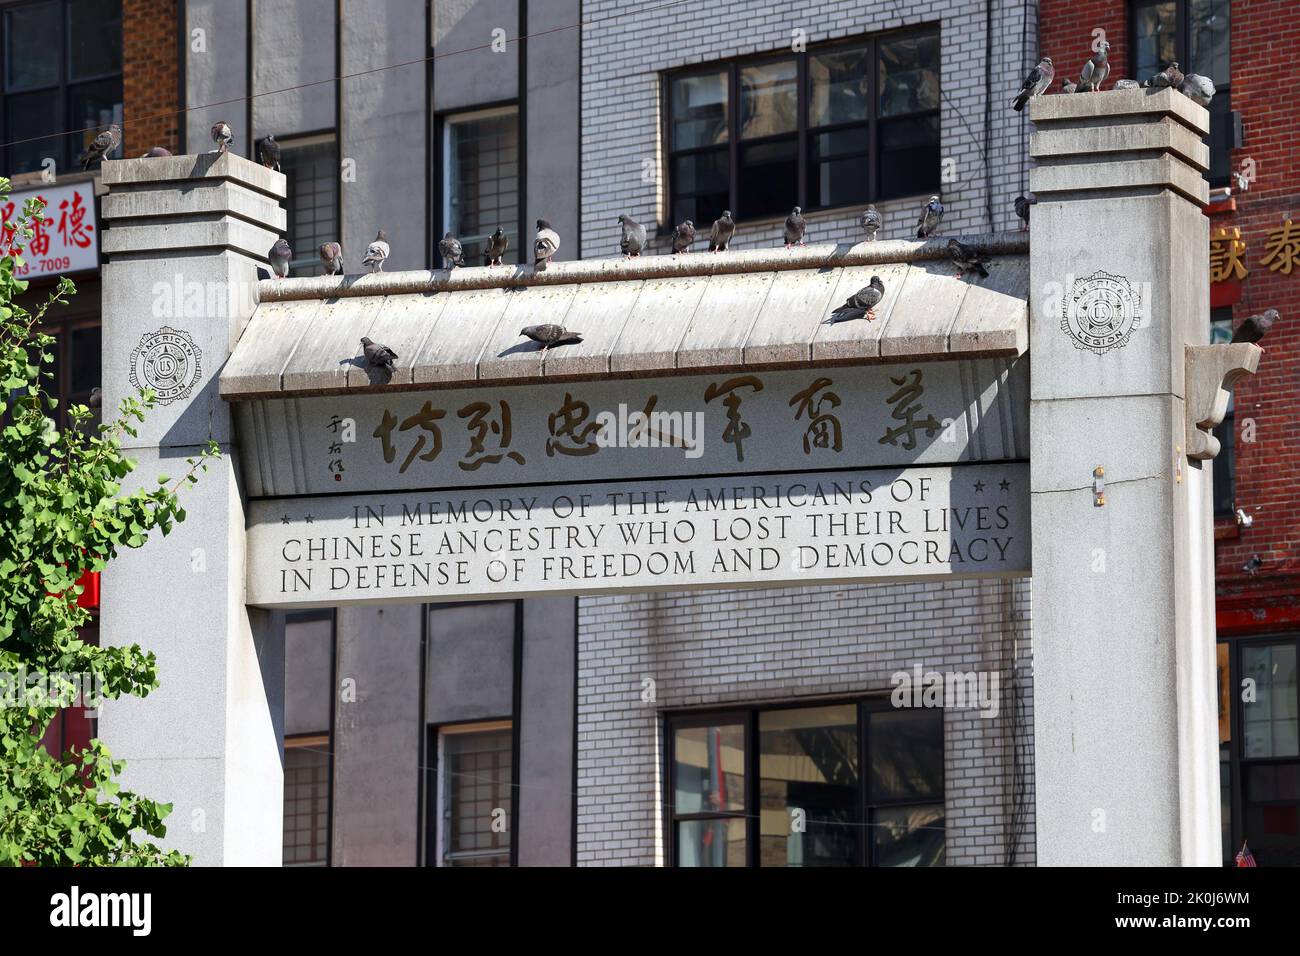 Kimlau Memorial Arch ehrt chinesisch-amerikanische Veteranen am Kimlau Square/Chatham Sq in Manhattan Chinatown, New York. Stockfoto